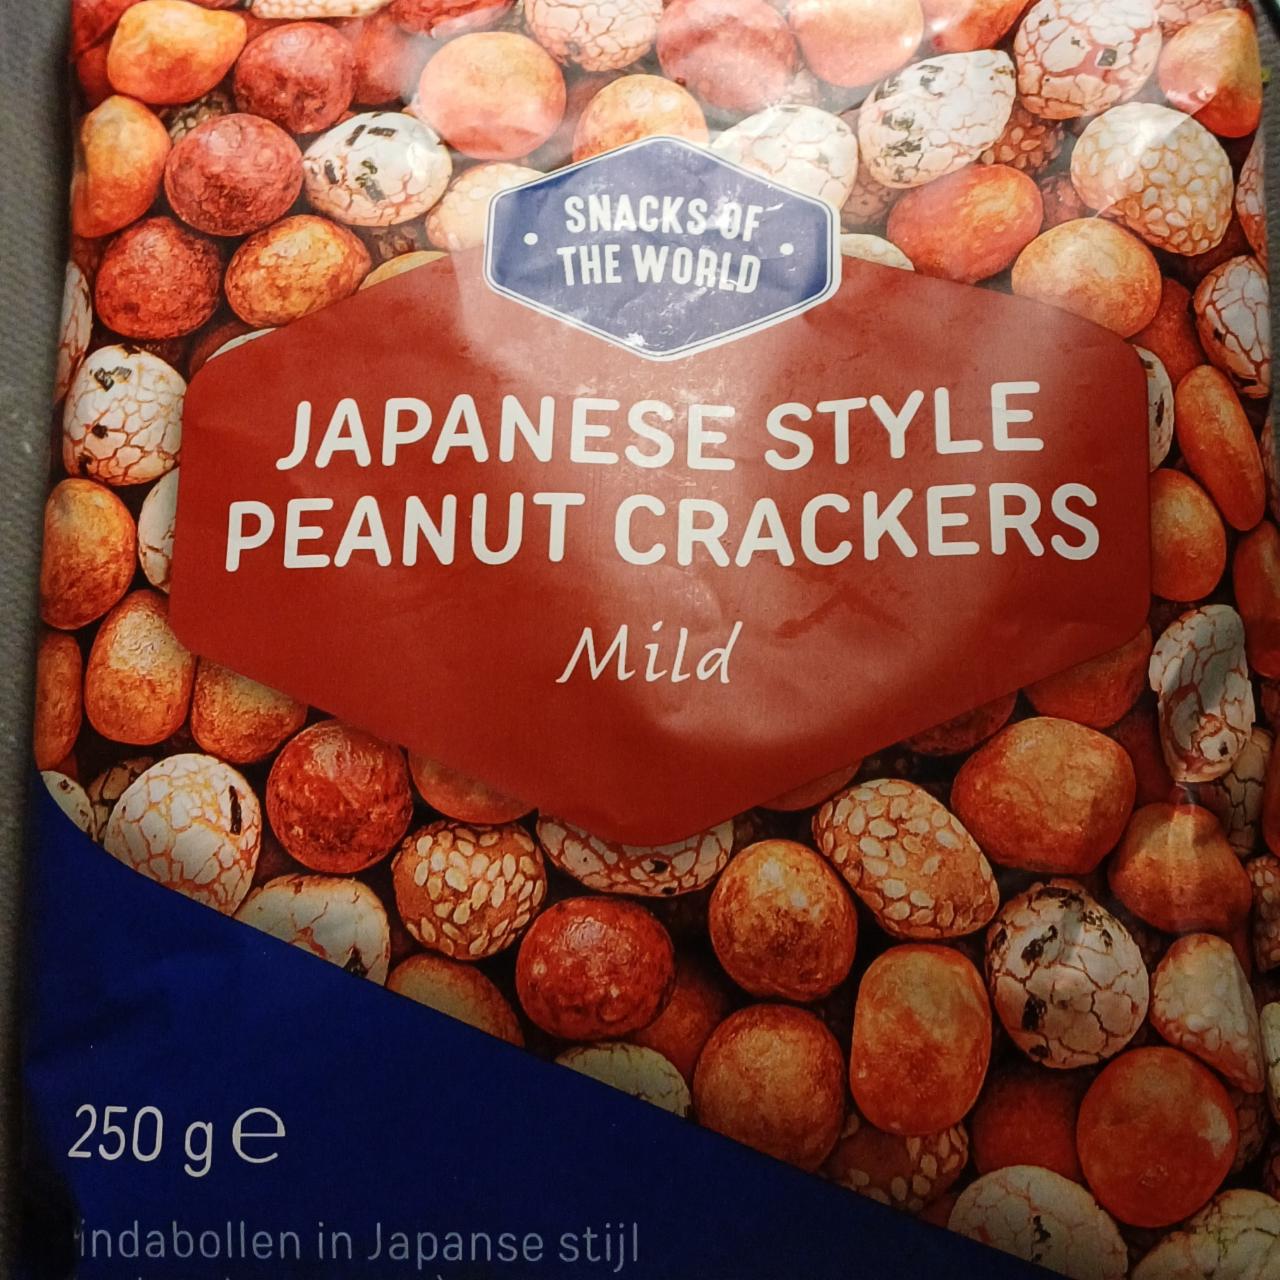 Fotografie - Japanese style peanut crackers mild Snacks of the world